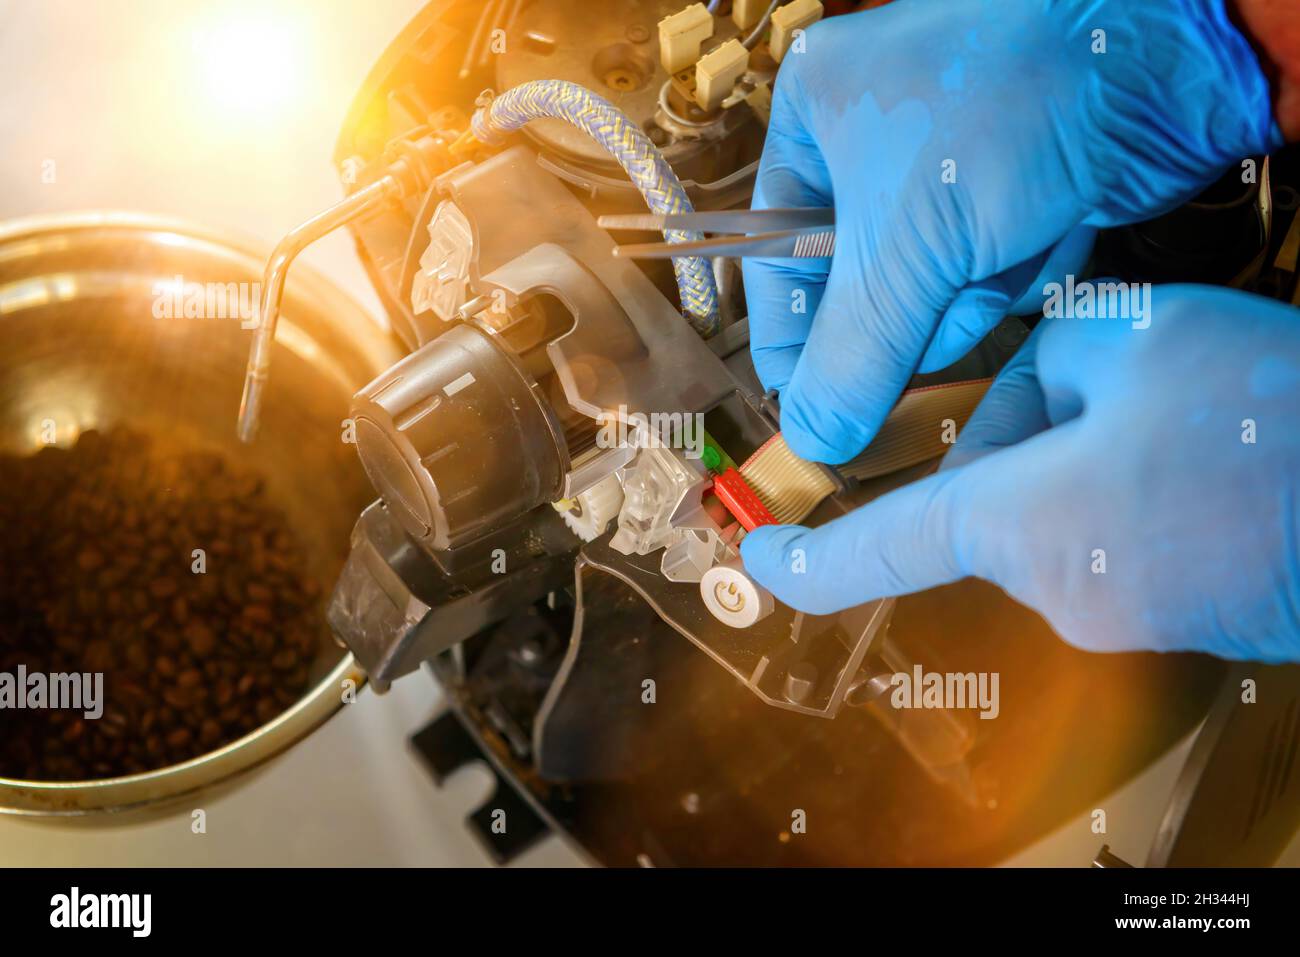 A repairman repairs a broken coffee maker with tool Stock Photo